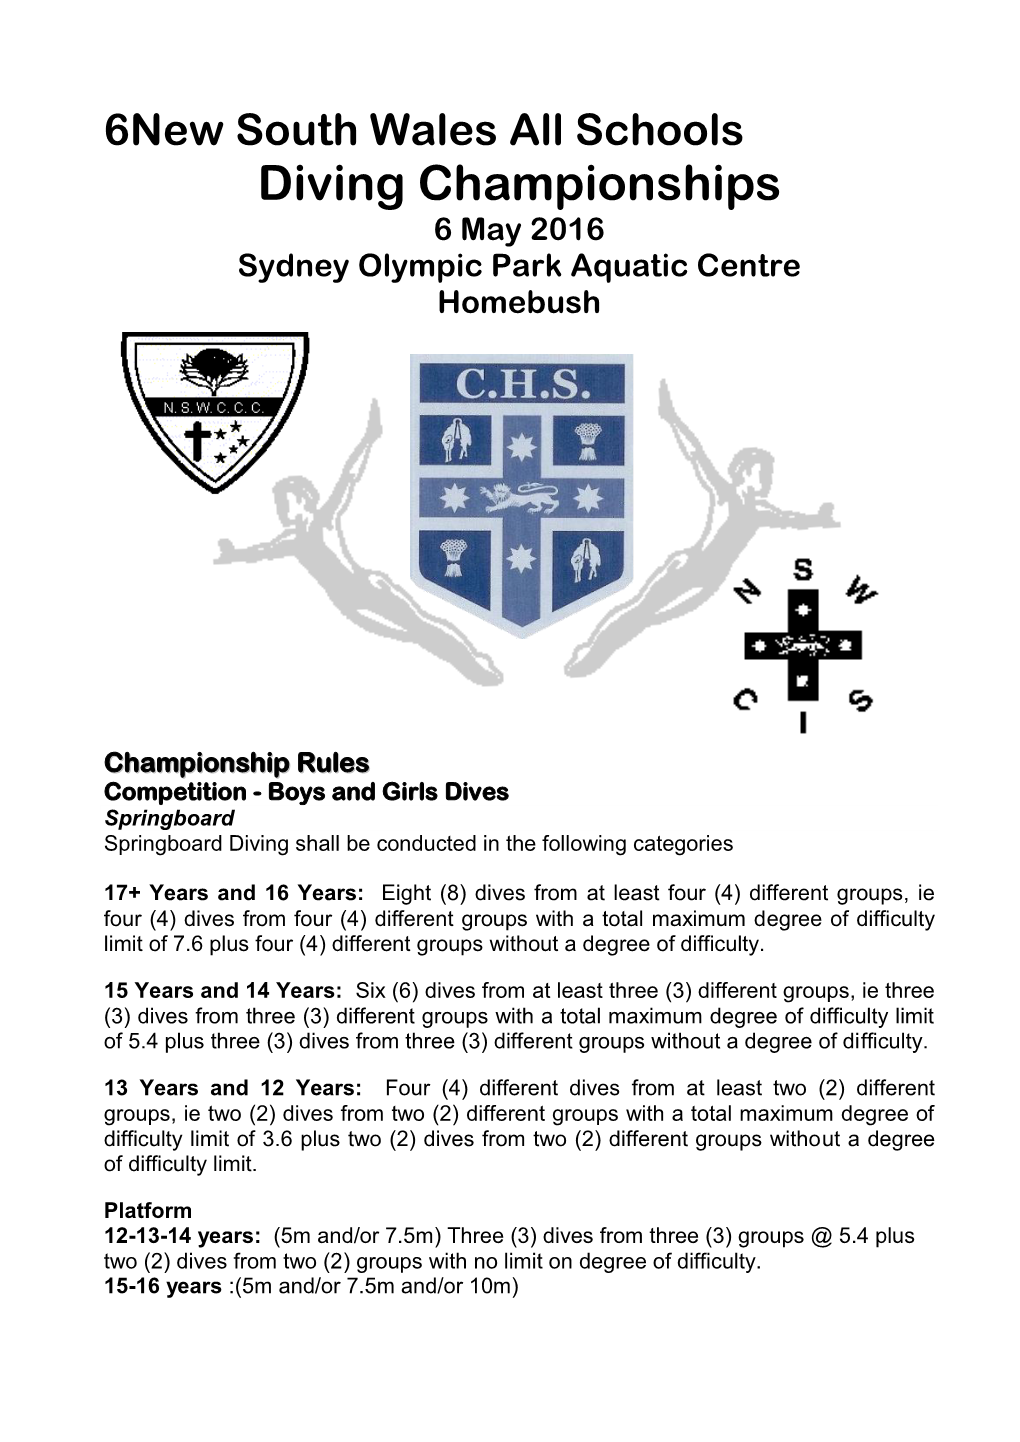 Diving Championships 6 May 2016 Sydney Olympic Park Aquatic Centre Homebush